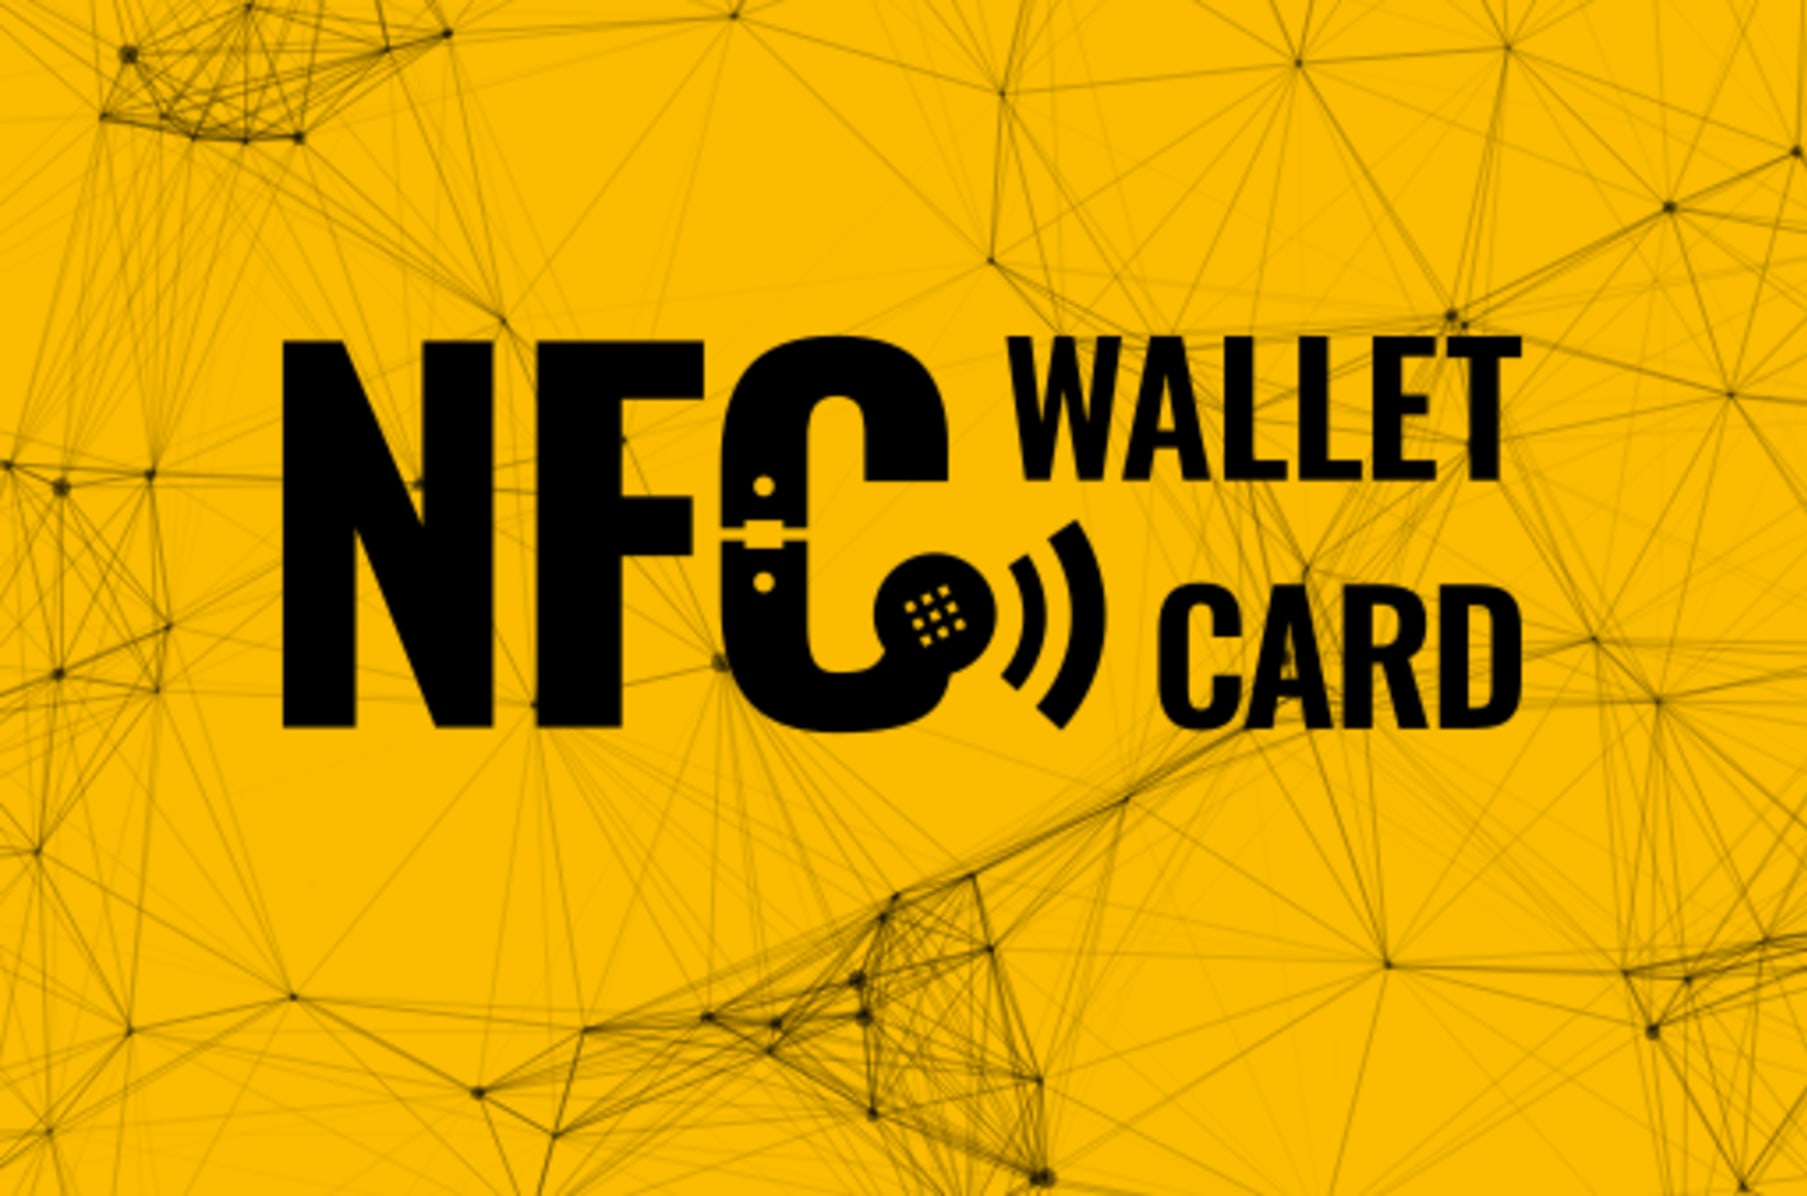 Nfc Wallet Card Bitcoin Nfc Crypto Wallet Card Indiegogo